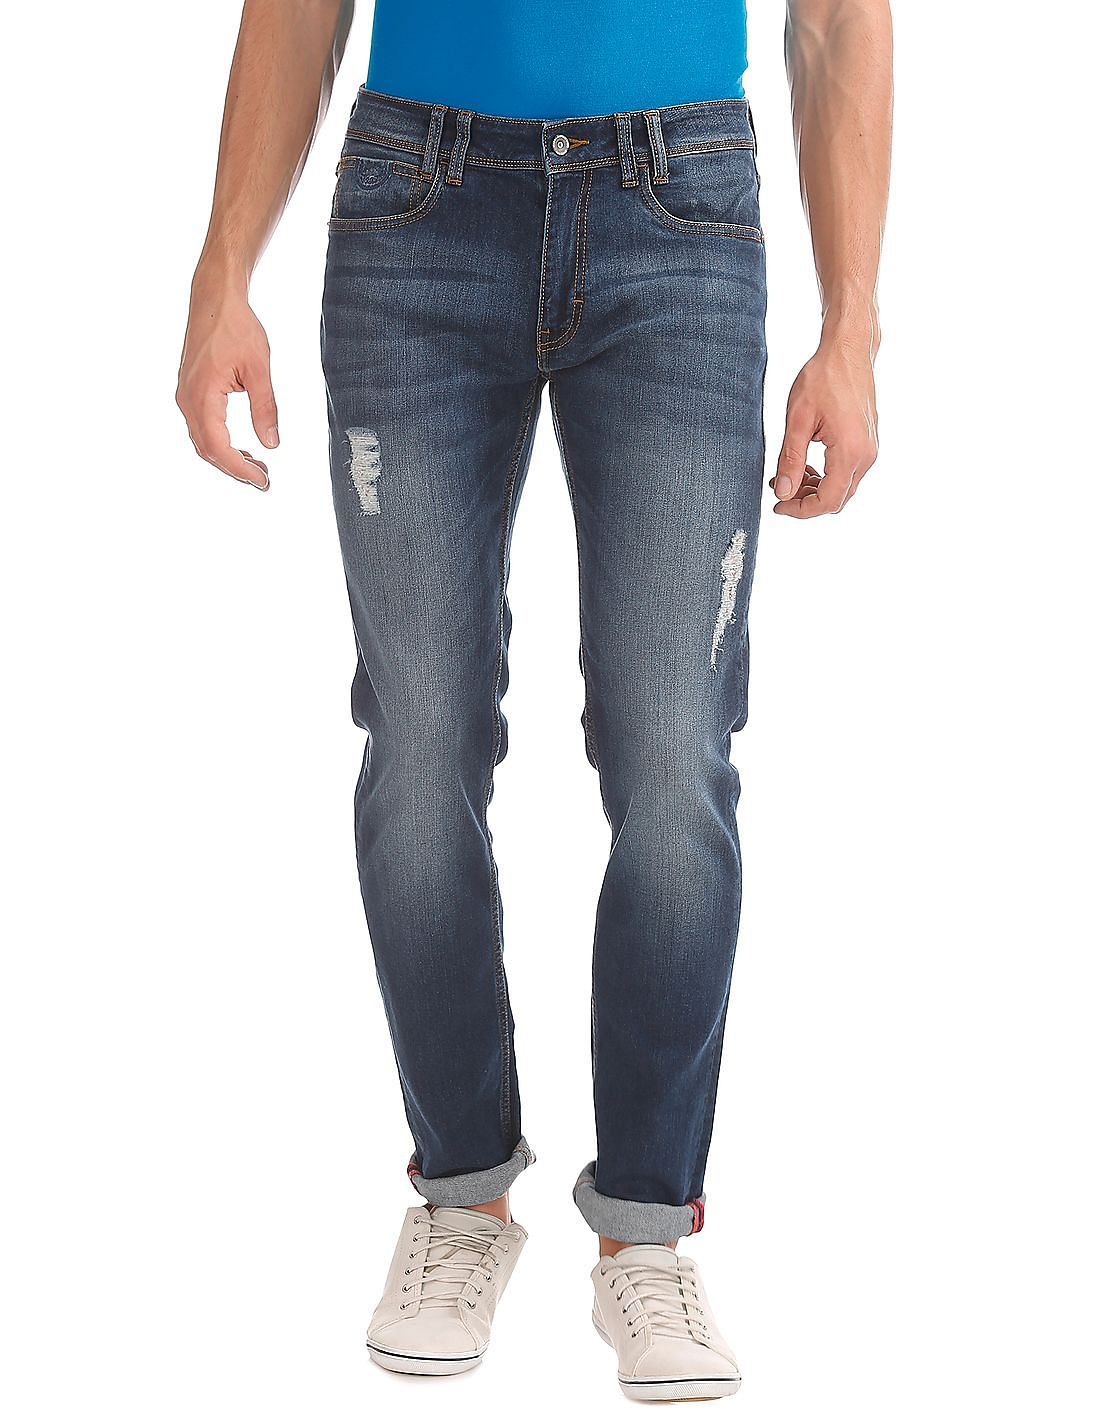 Buy Izod Men Skinny Fit Distressed Jeans - NNNOW.com